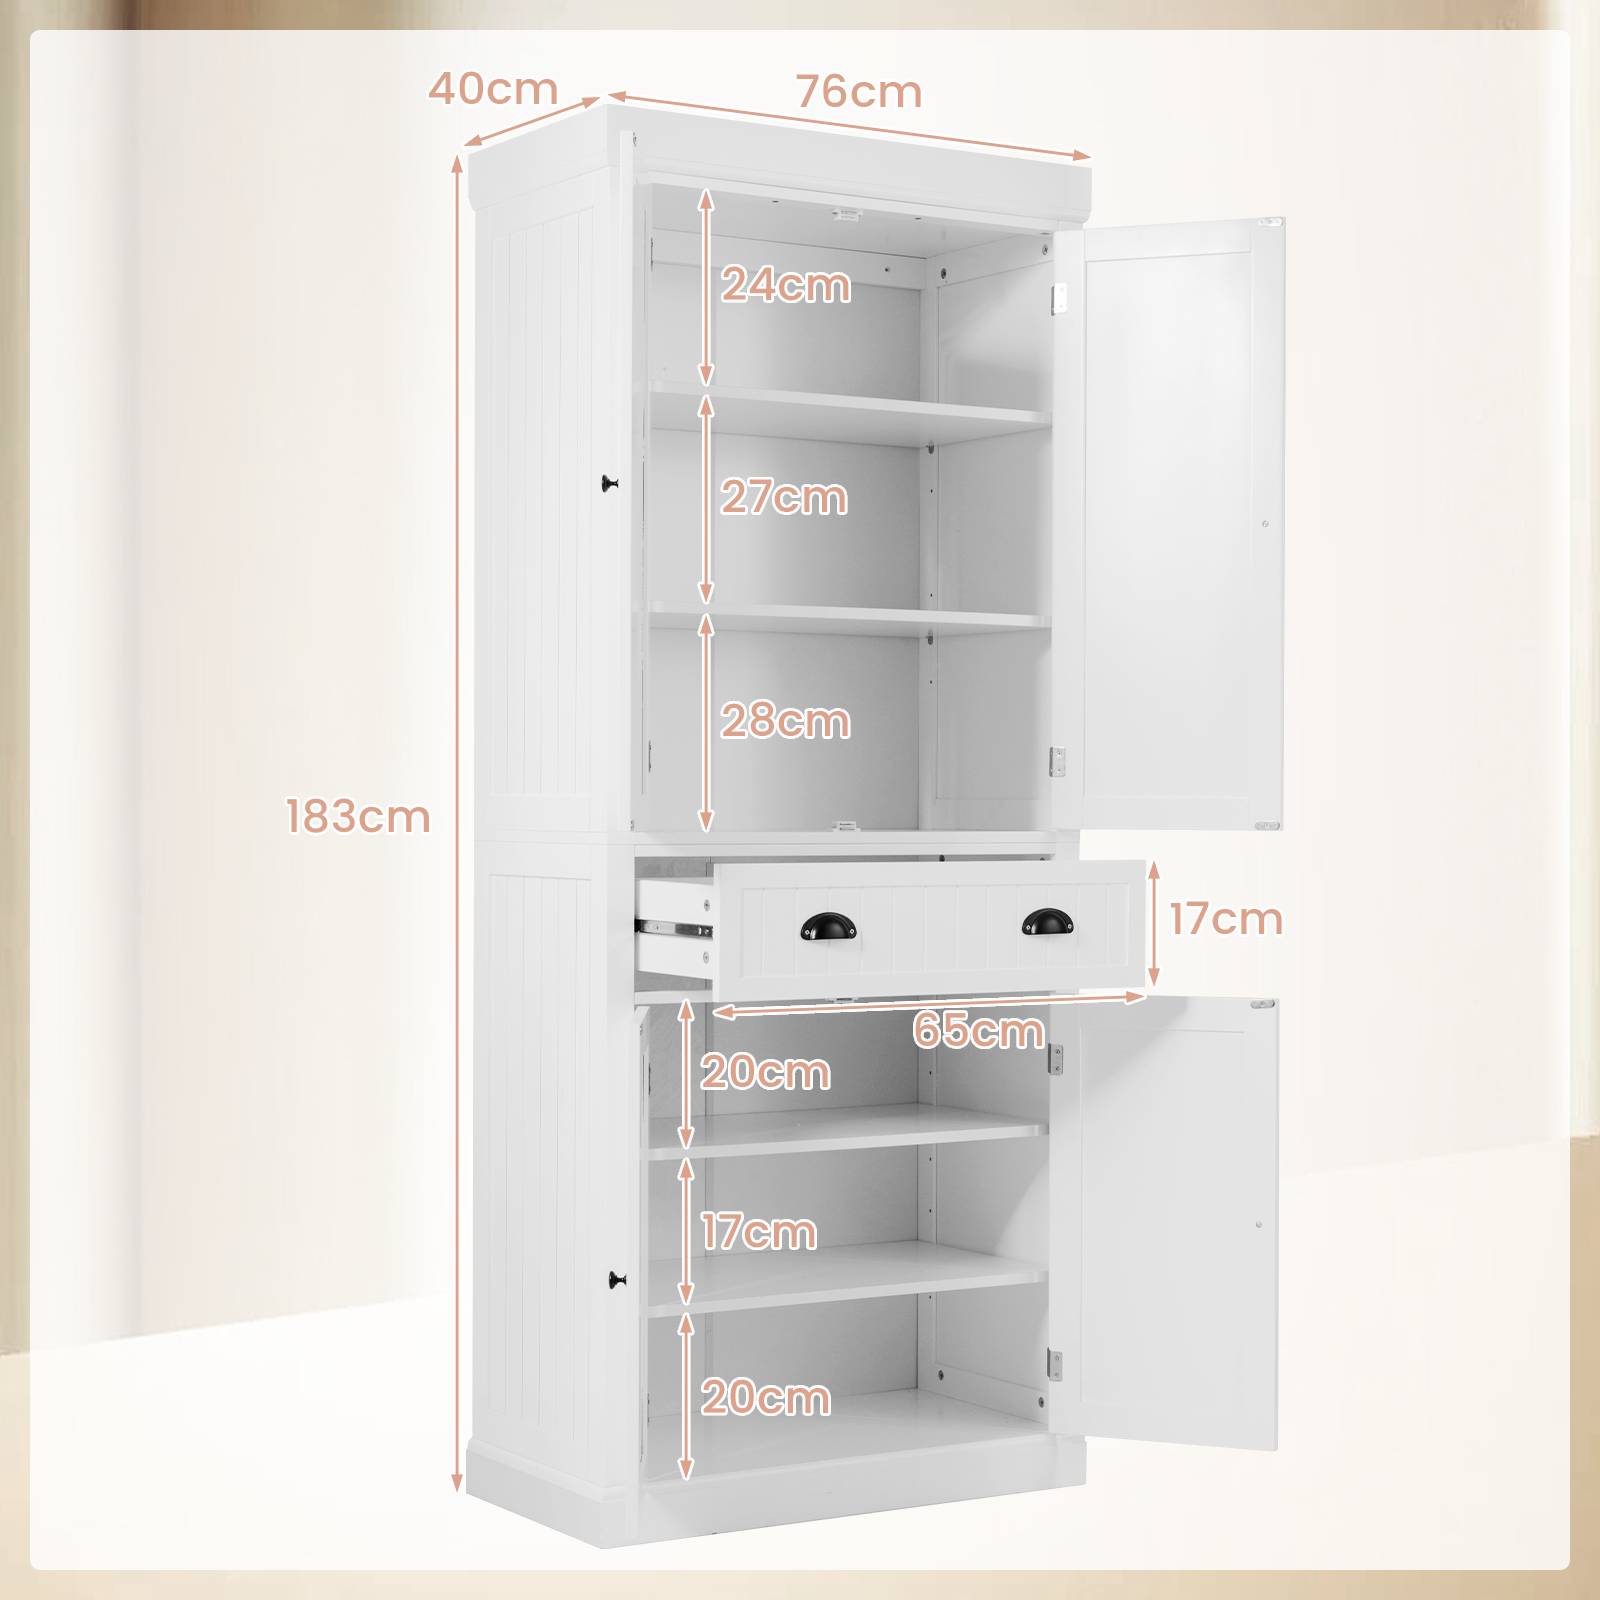 4_Door_Tall_Kitchen_Cupboard_Adjustable_Shelves_and_Drawer_White-5.jpg